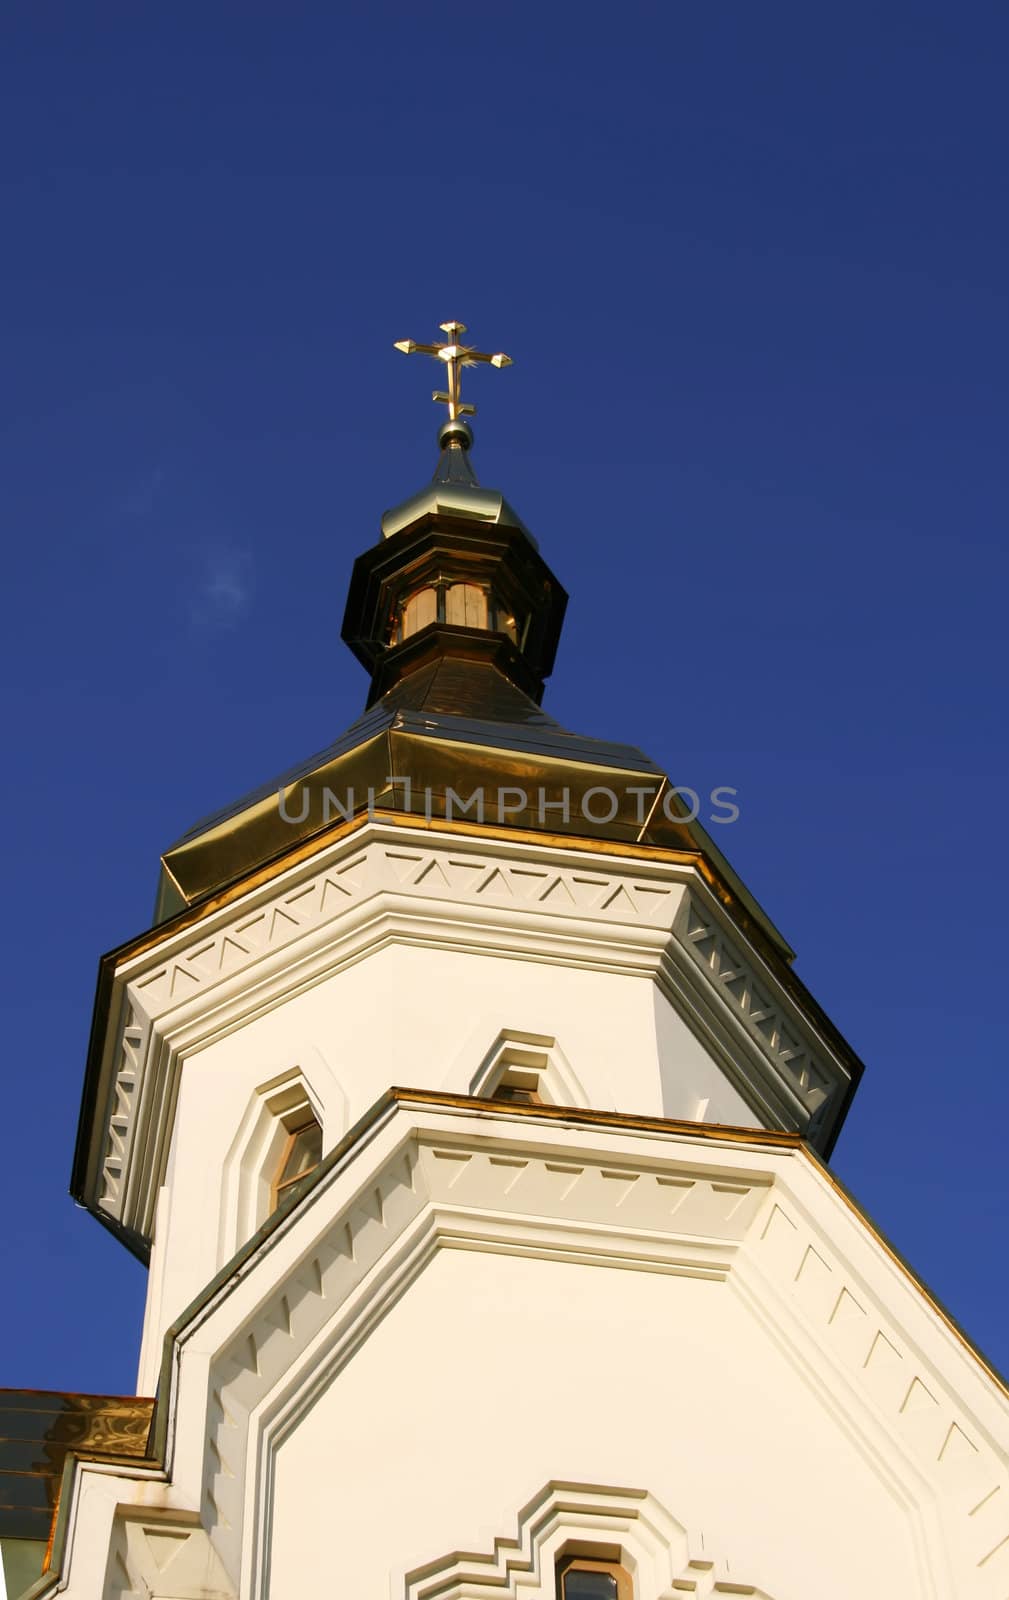 Small church on Dniepr river in Kiev, Ukraine